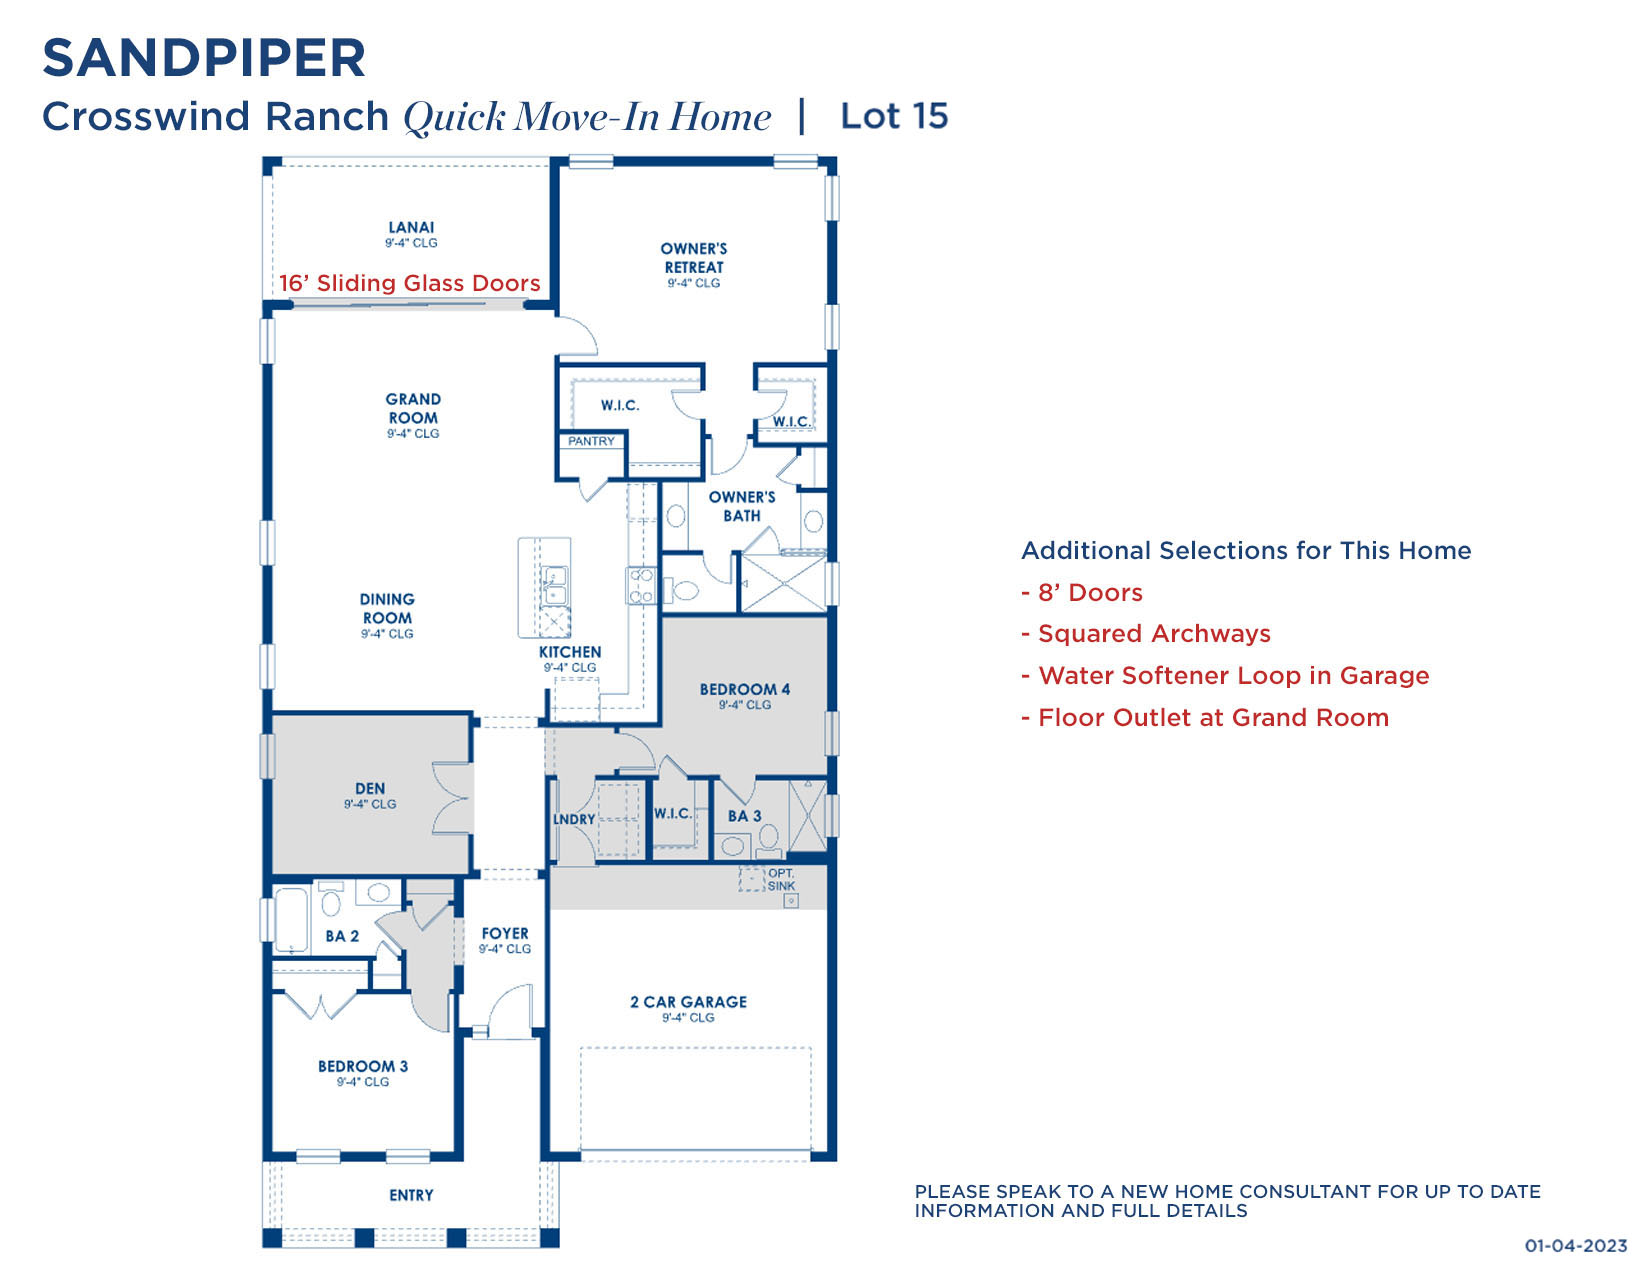 CWR SANDPIPER 15 1.4.23 Floorplan